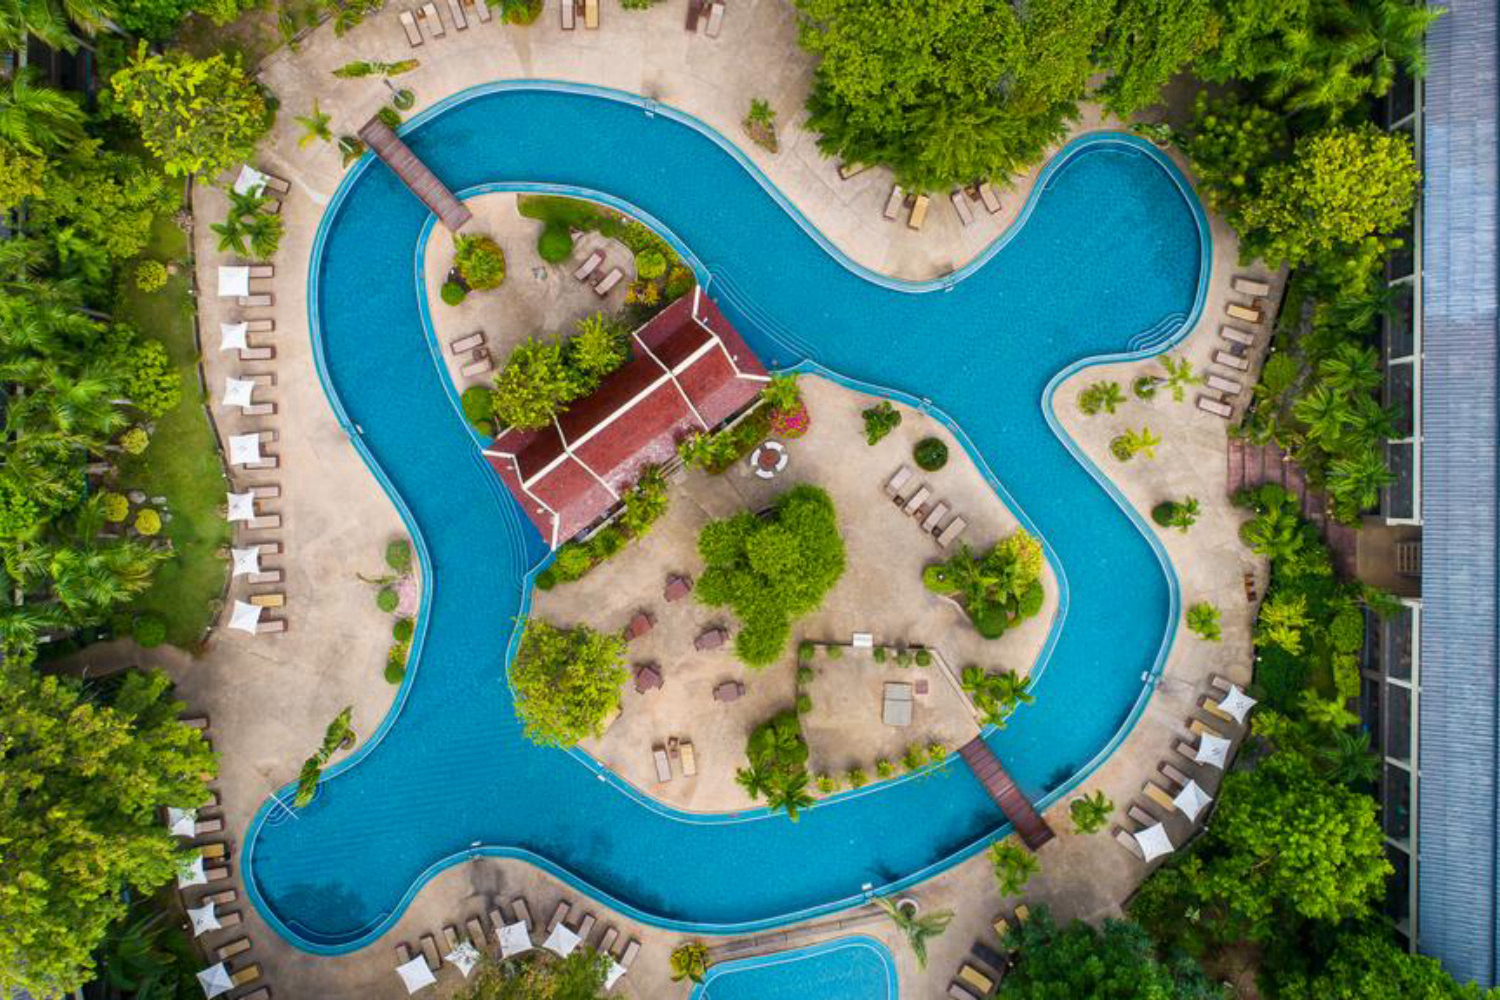 The Green Park Resort - Image 1